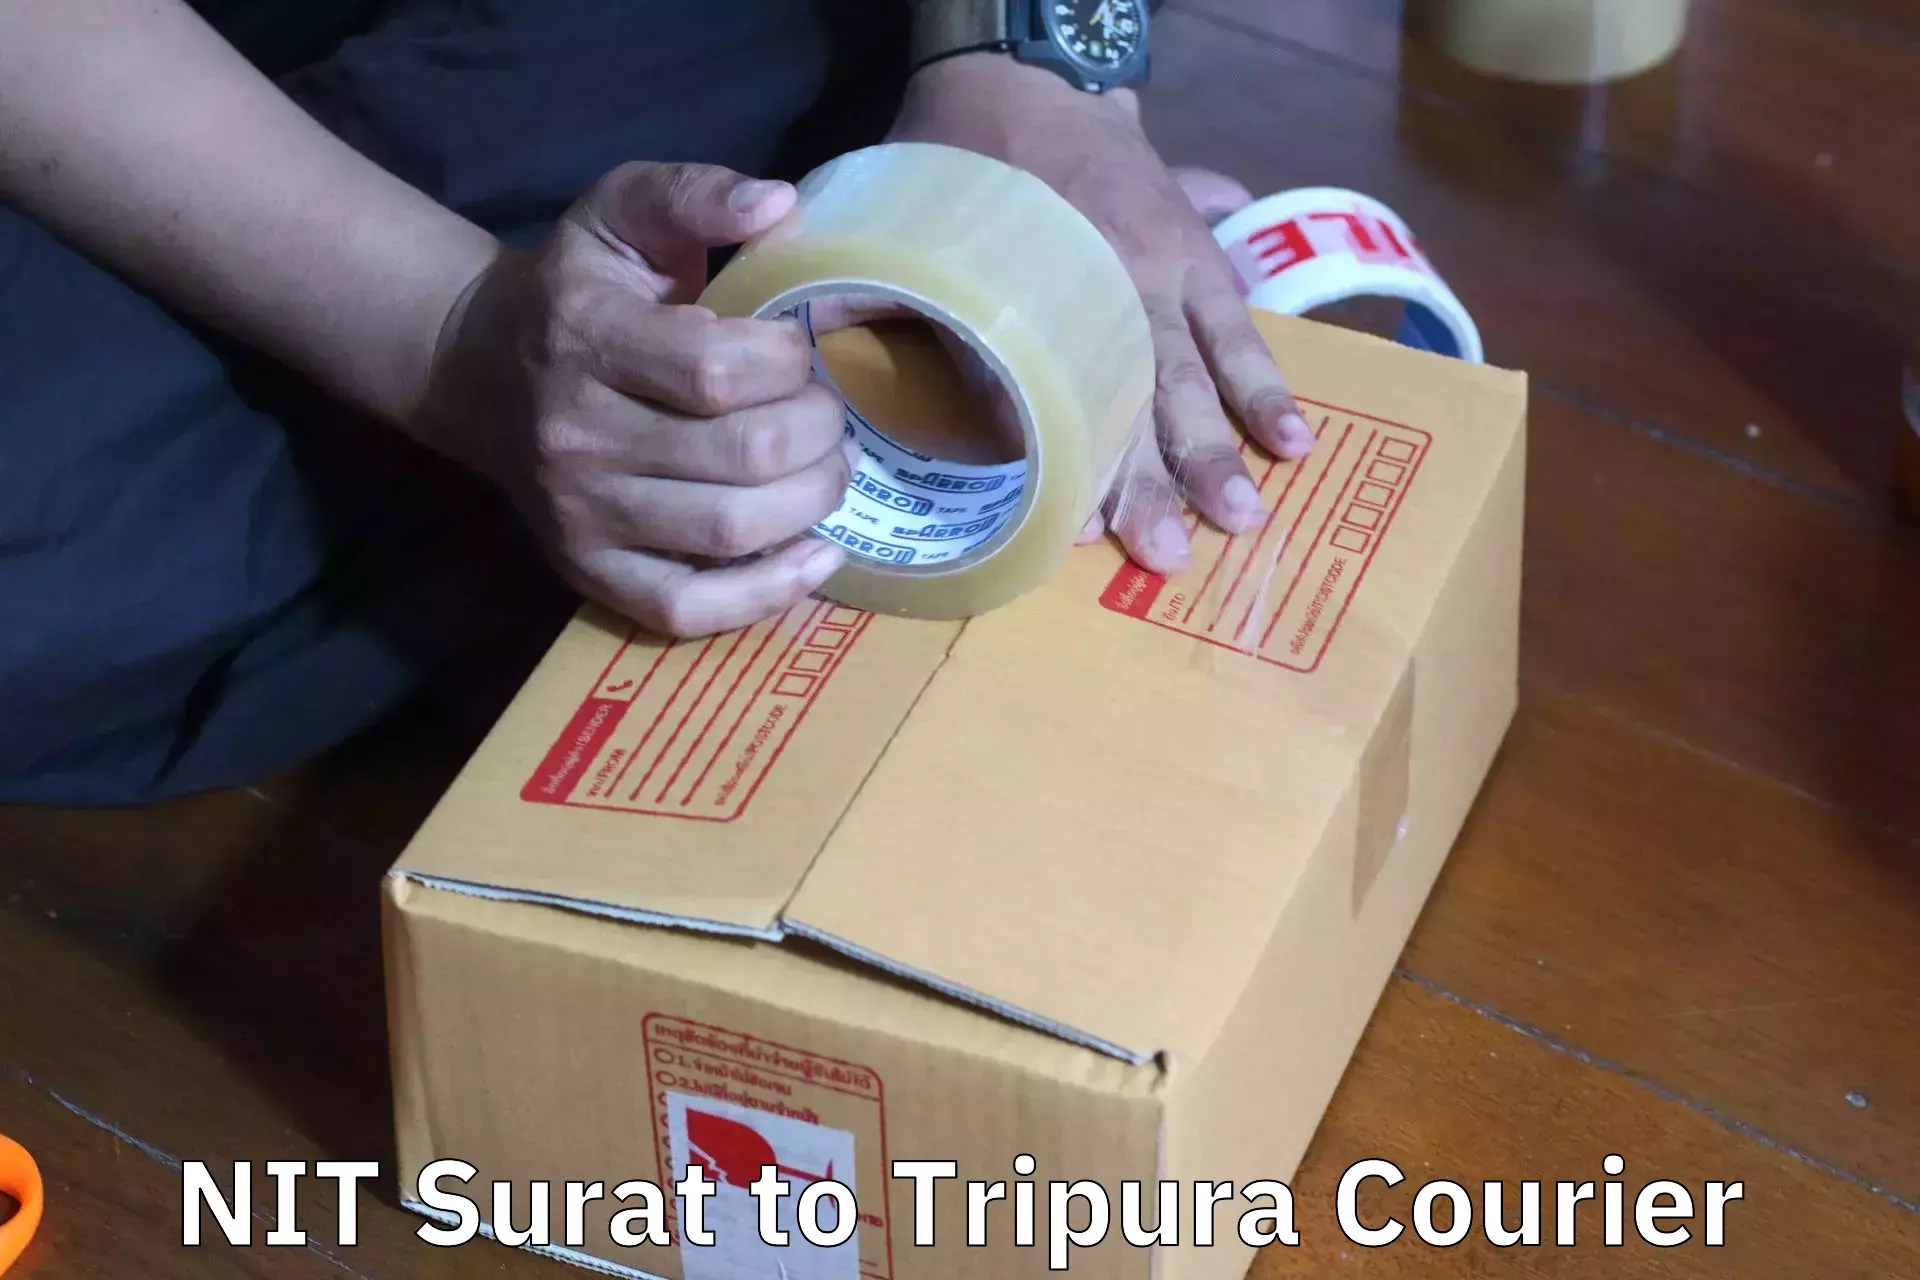 Quality moving company NIT Surat to Tripura